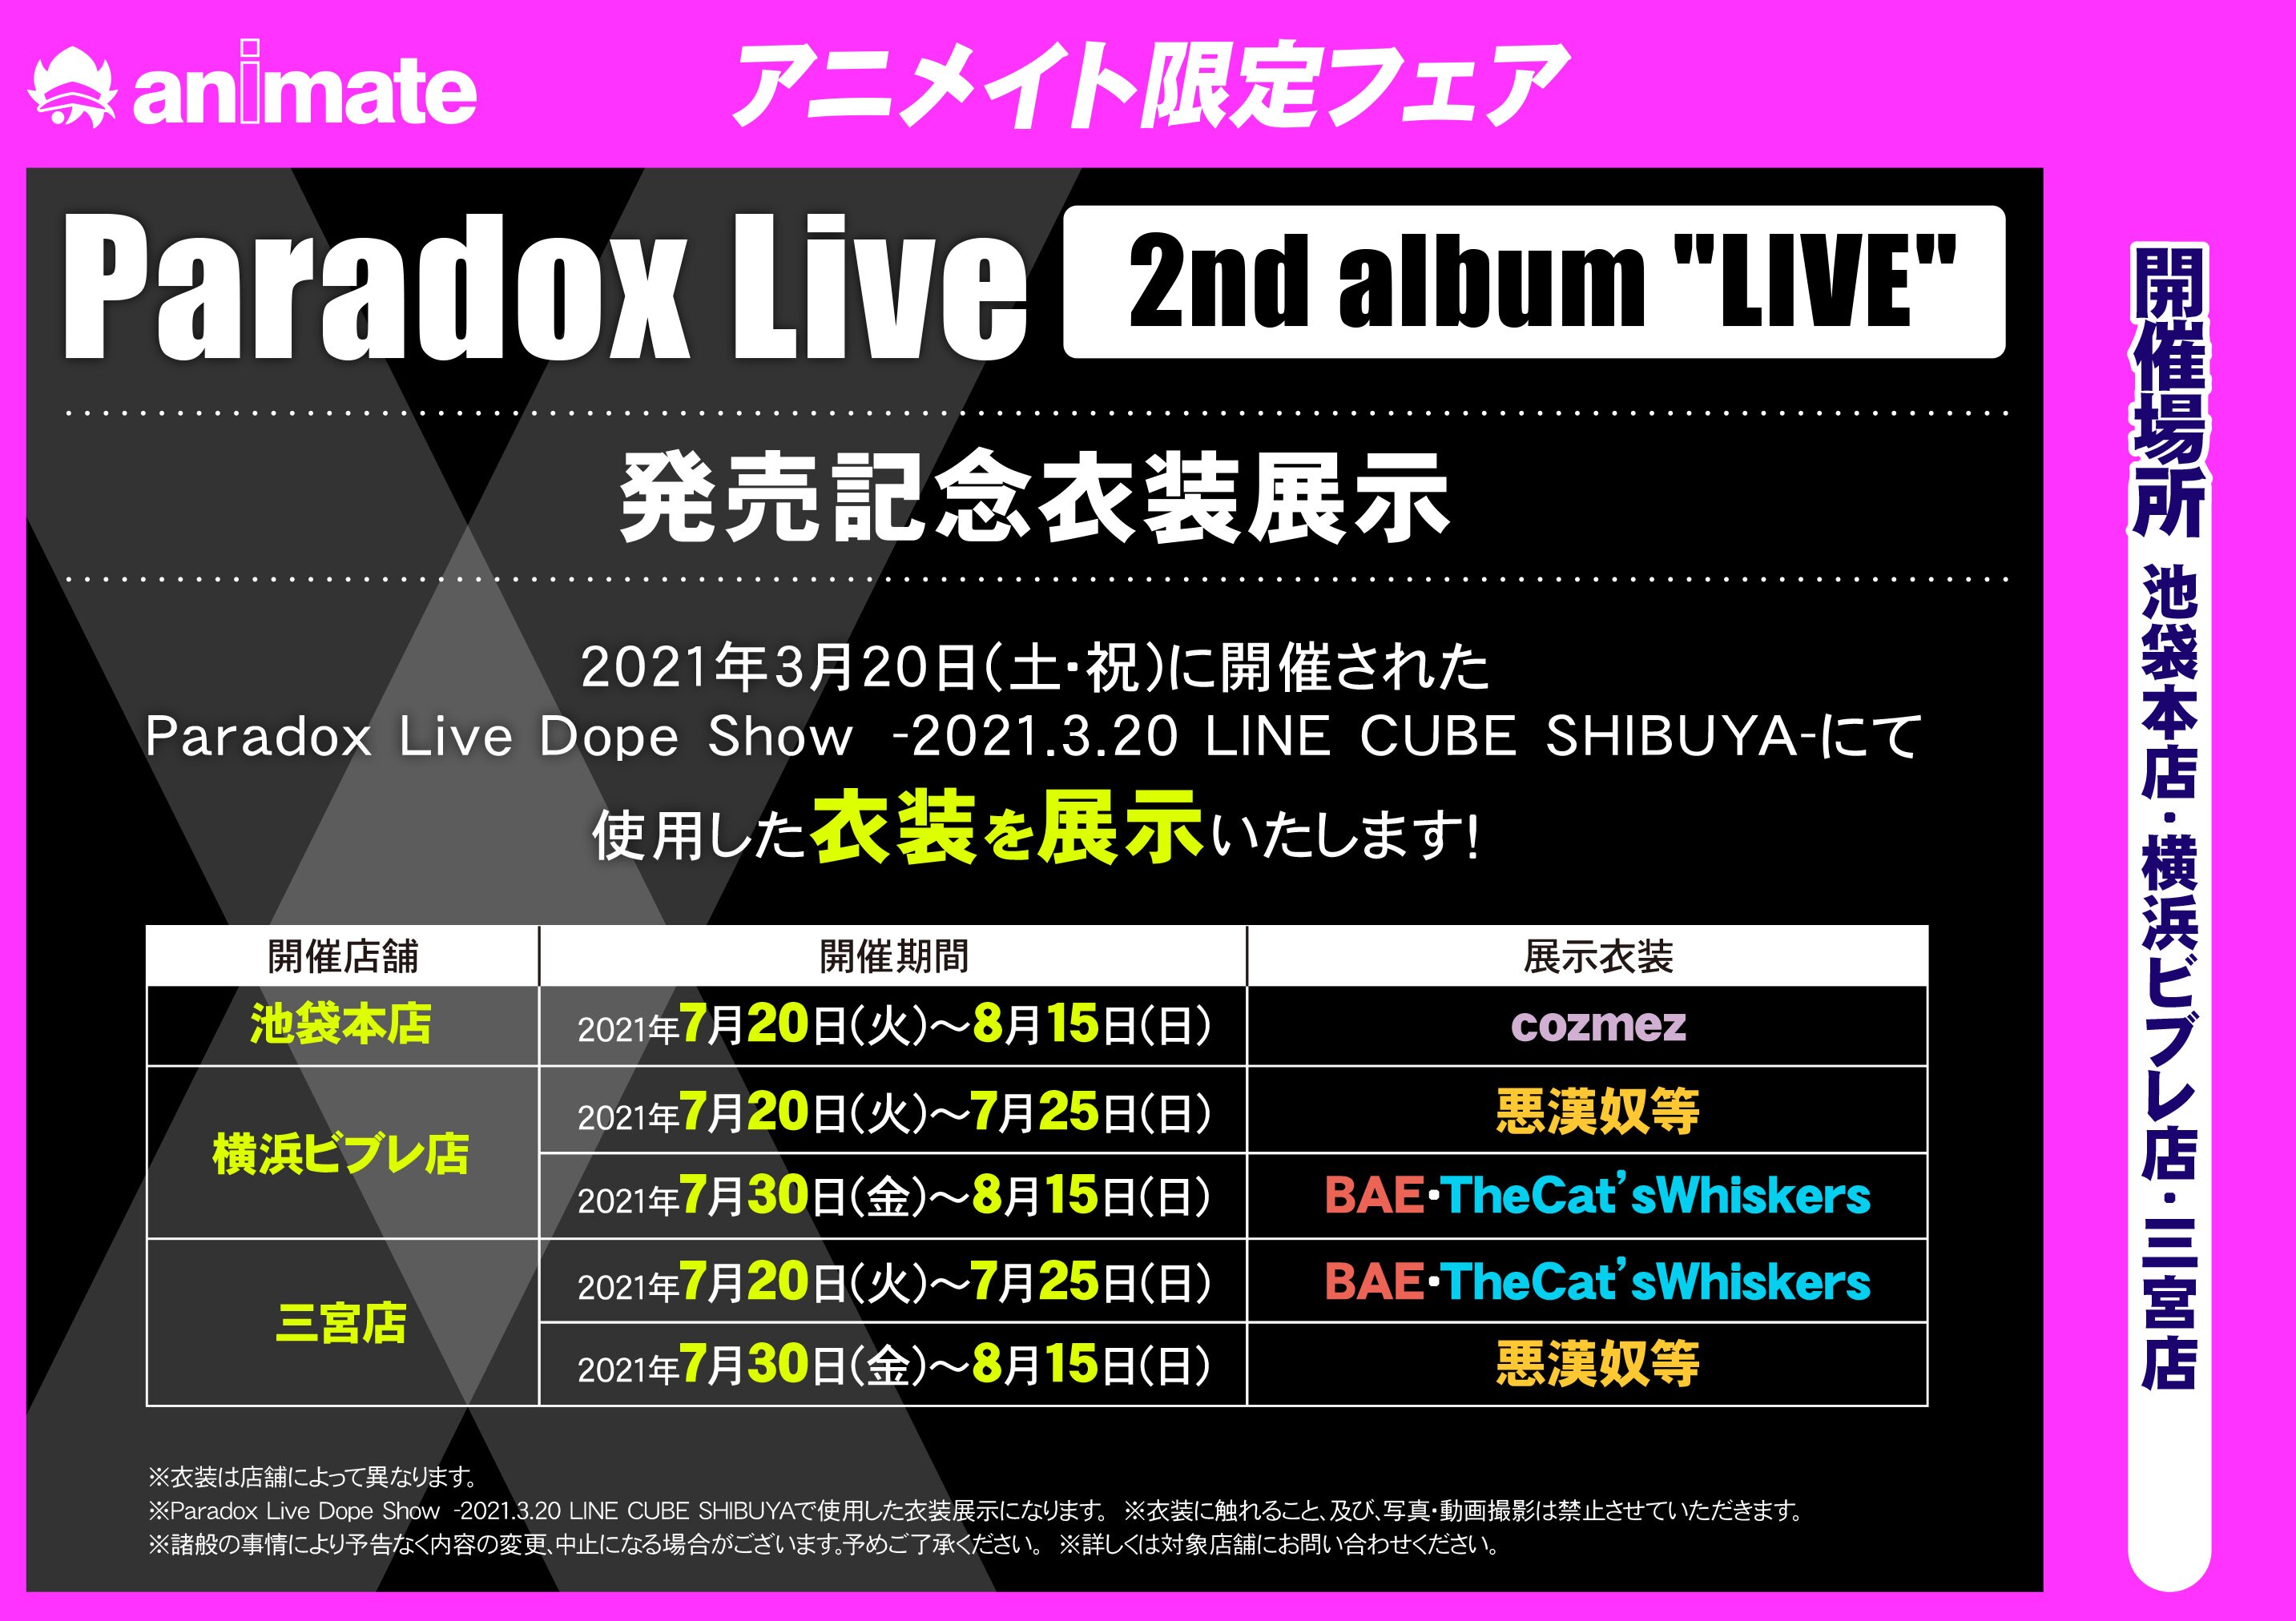 Paradox Live 2nd Album Live 発売記念フェア アニメイト開催決定 衣装展も実施 News Paradox Live パラライ 公式サイト